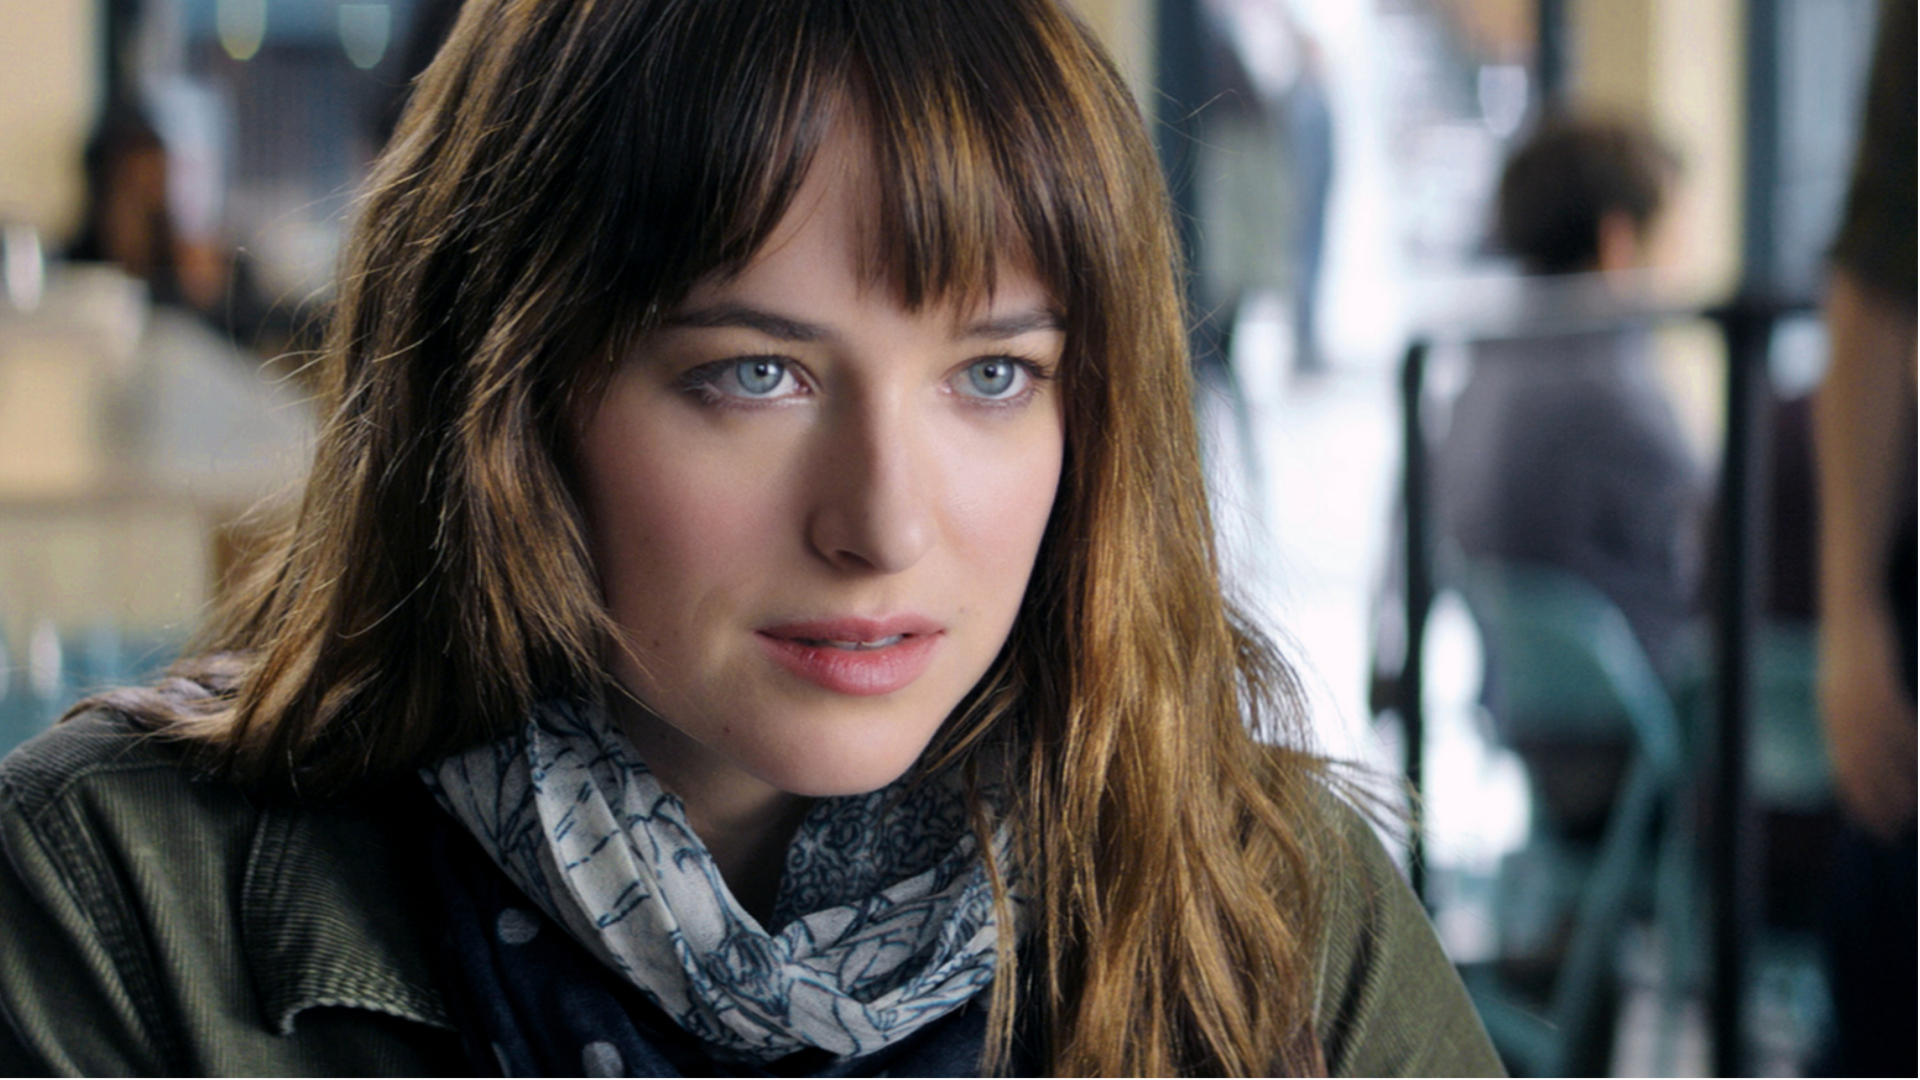 Fifty Shades Of Grey 4 Dakota Johnson opens up on Fifty Shades of Grey set problems | GamesRadar+